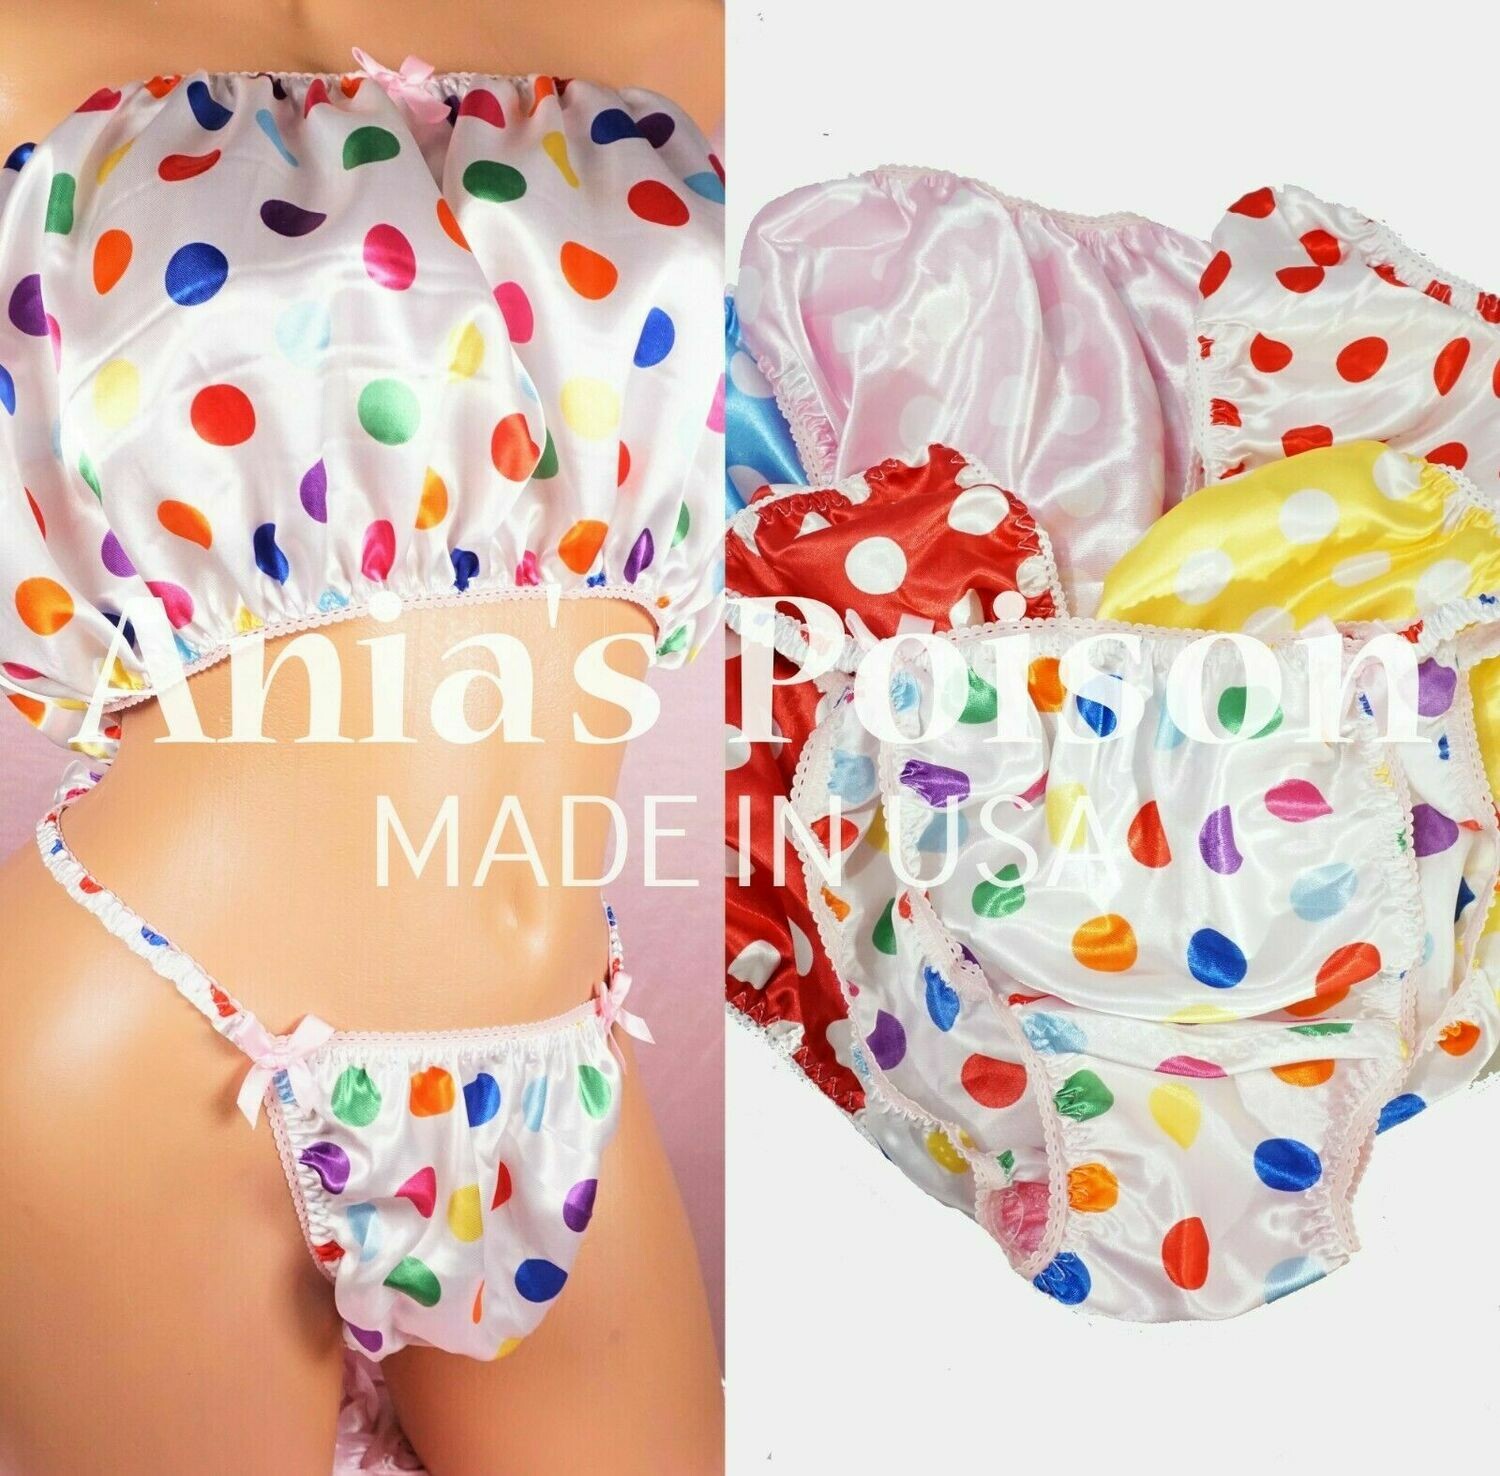 Ania's Poison MANties S - XXL Polka Dot White Trim shiny Rare 100% polyester string bikini sissy mens underwear panties Bra or Skirt!